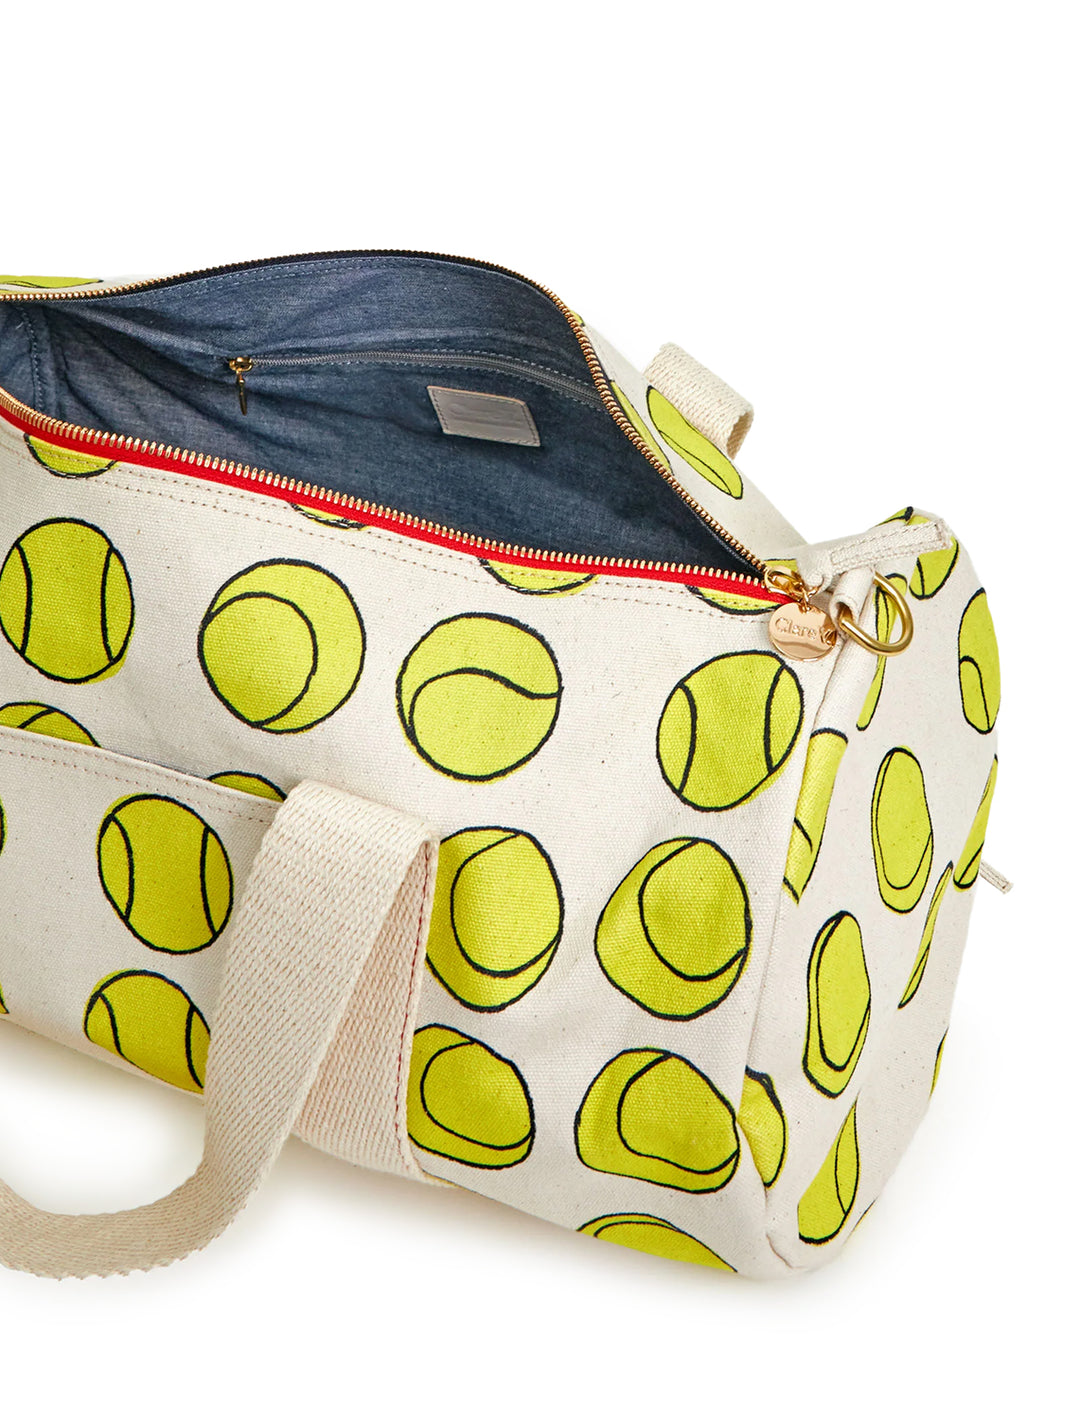 Close-up view of Clare V.'s tennis balls duffle bag.